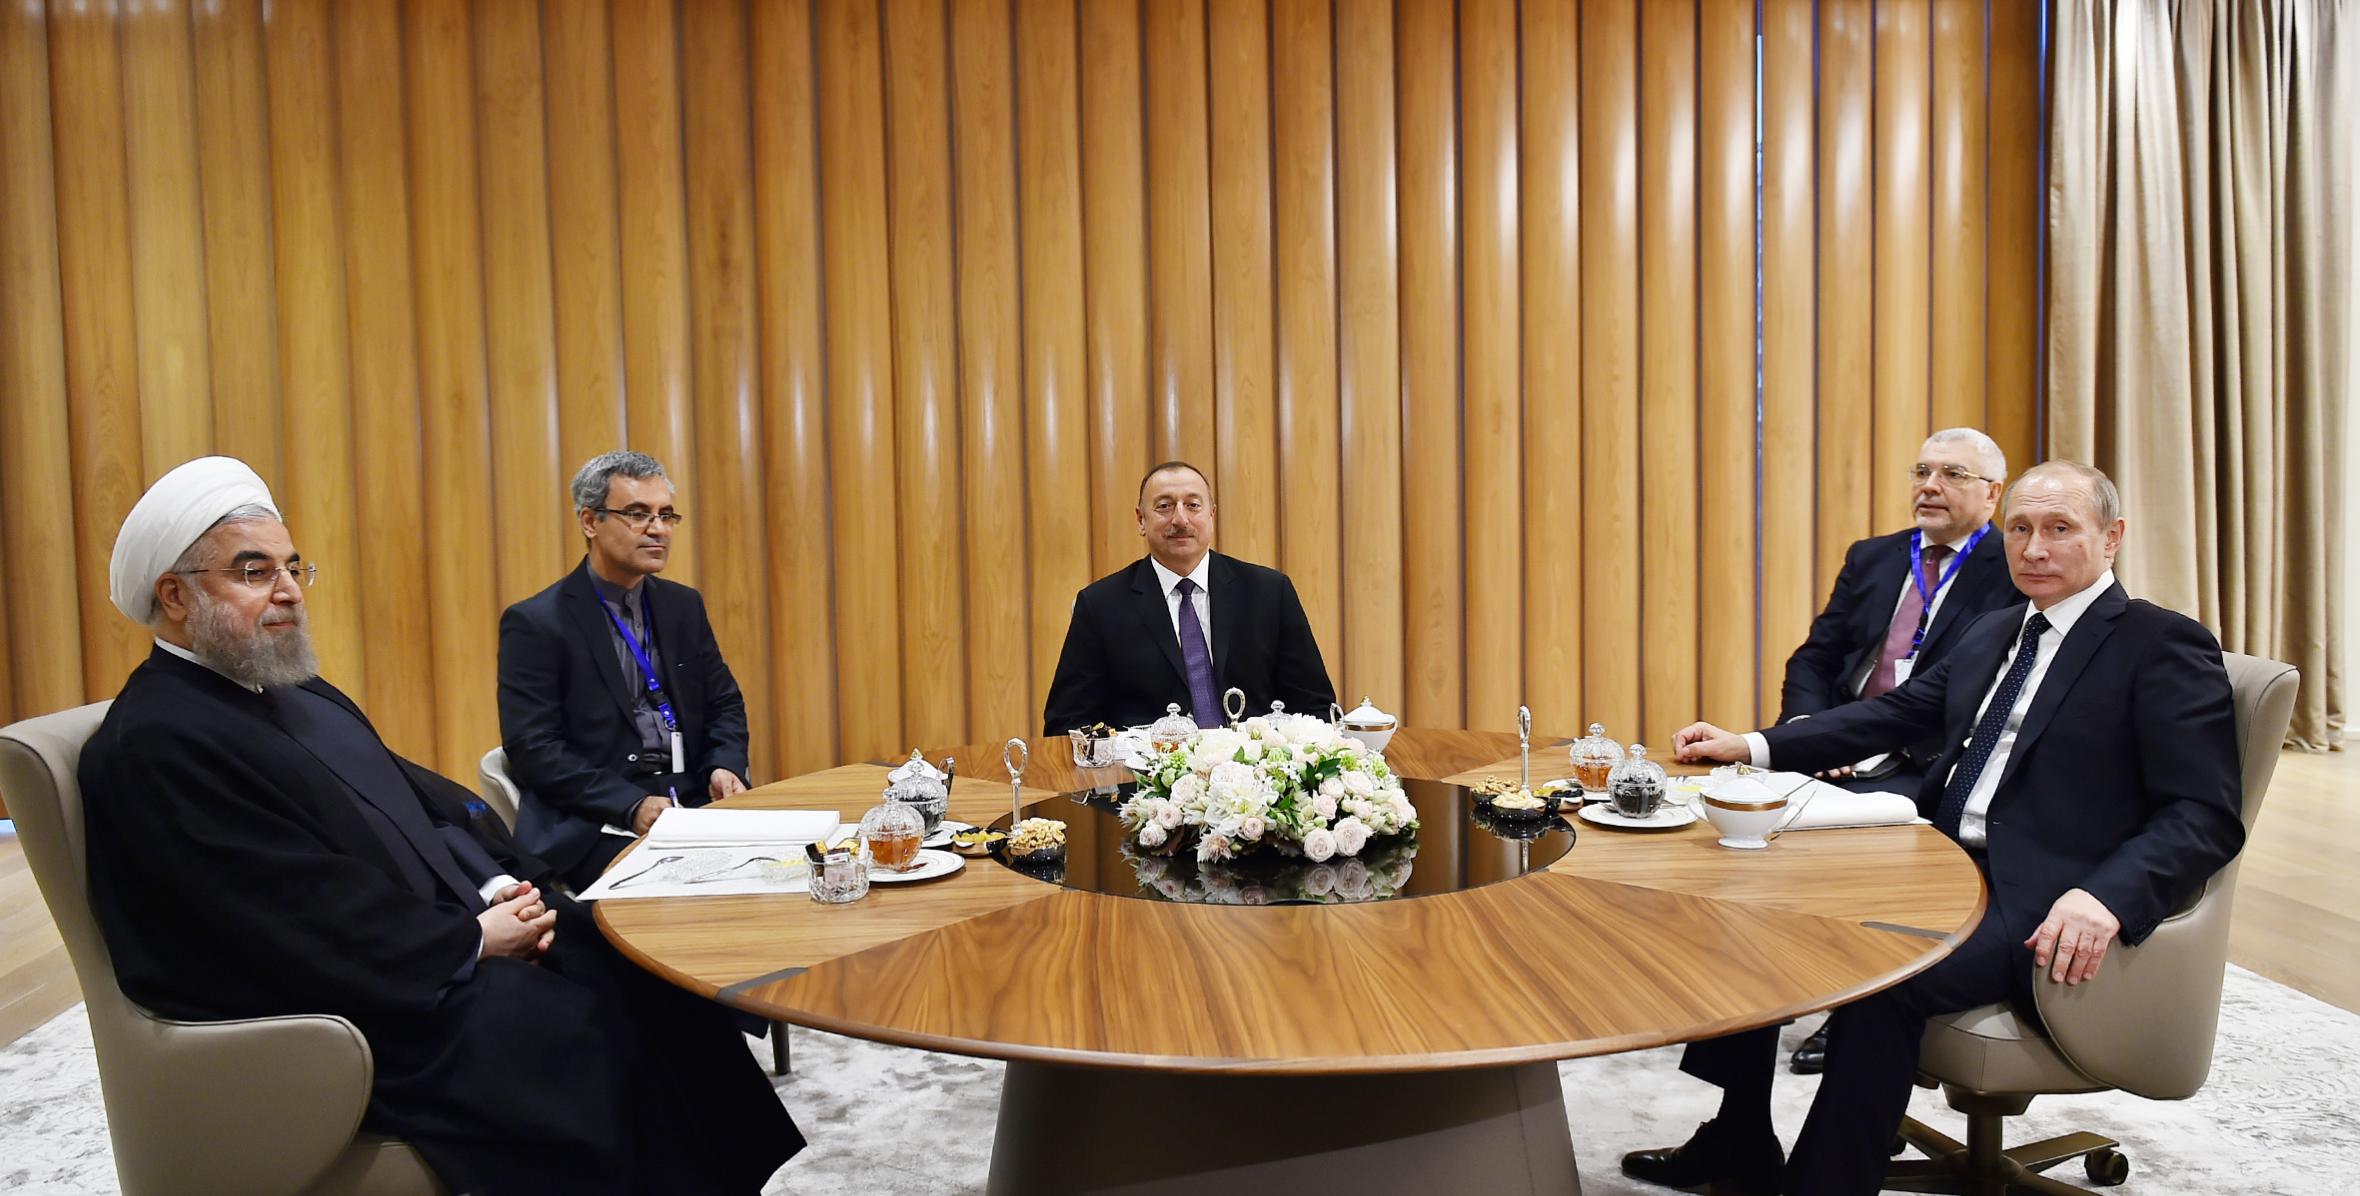 Meeting of presidents of Azerbaijan, Iran and Russia was held in Baku